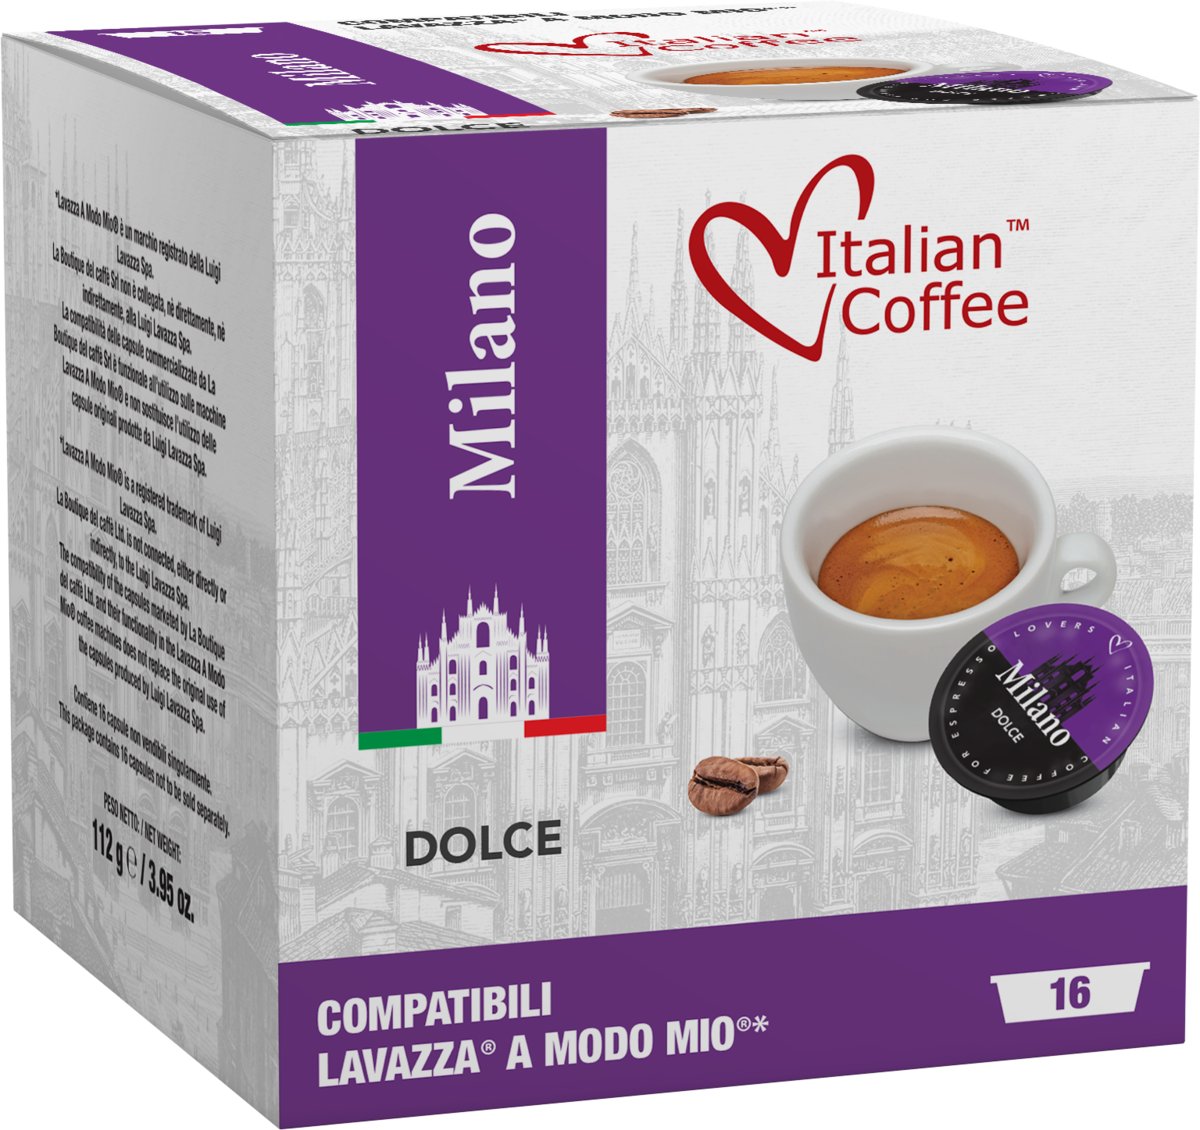 Italian Coffee Milano Dolce 16 kapsułek do Lavazza A Modo Mio